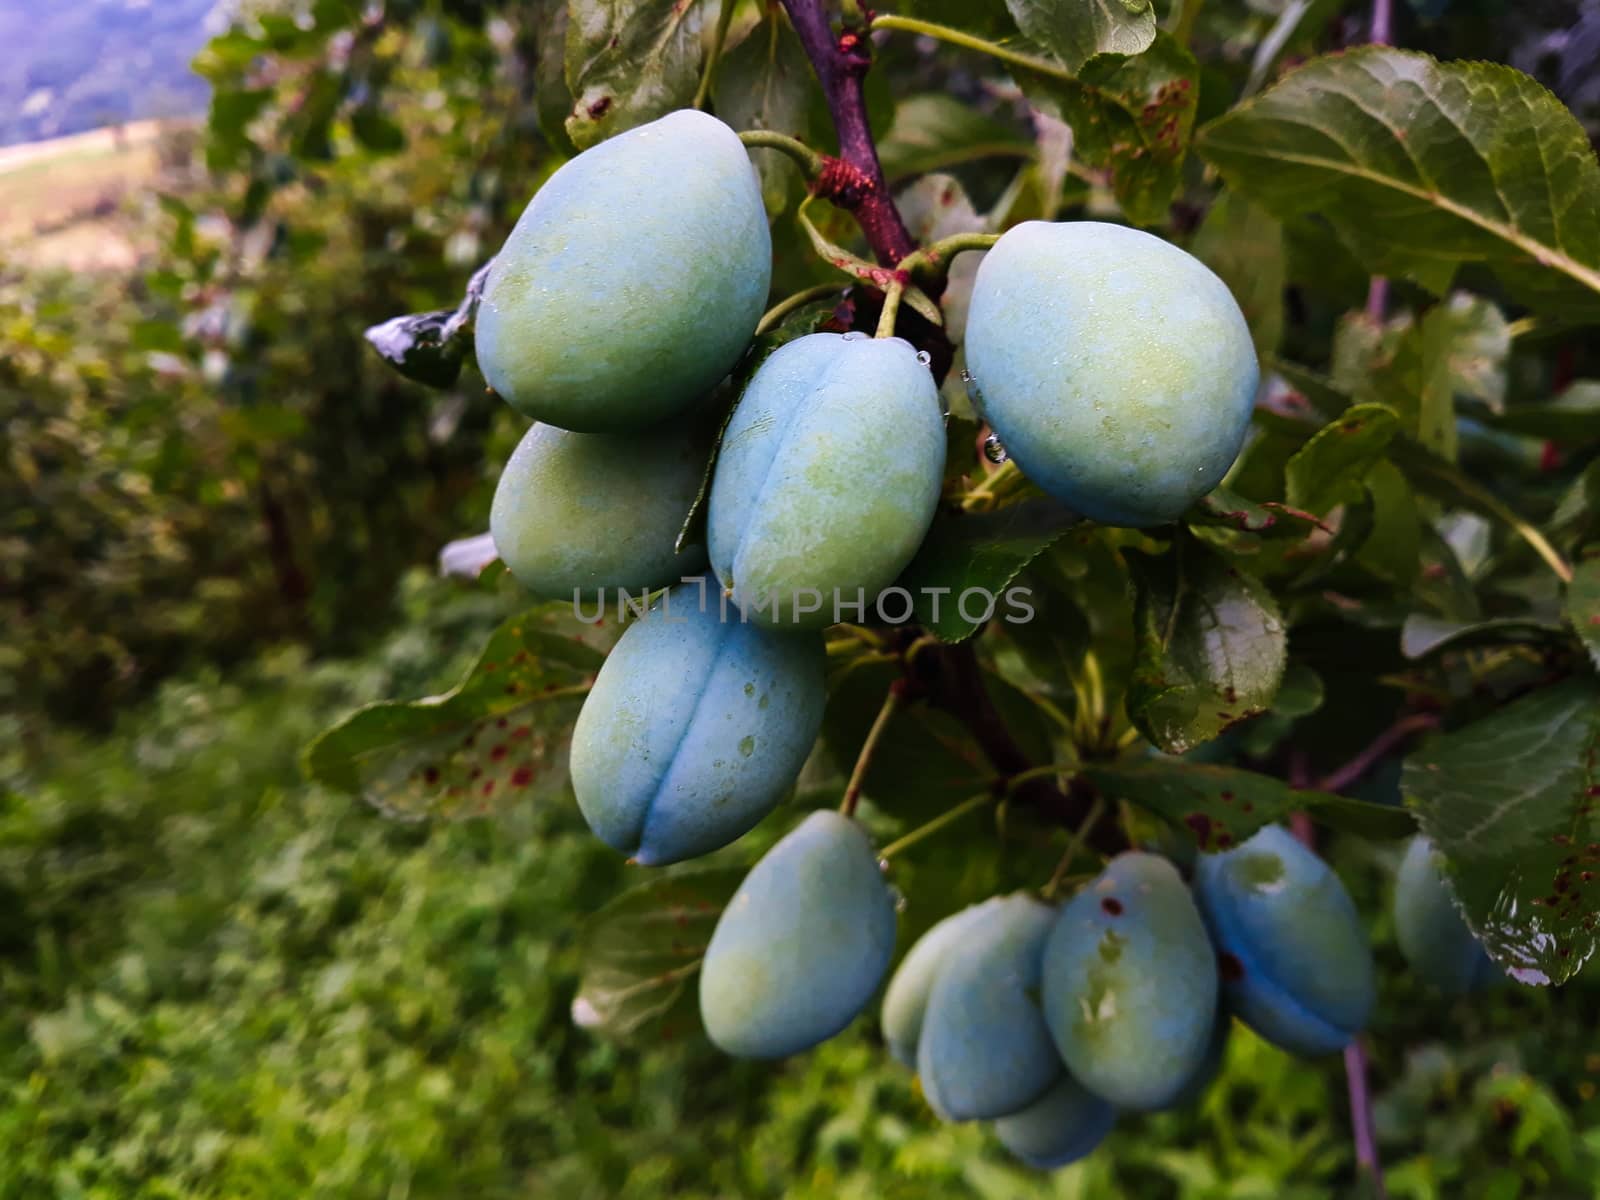 A group of large green unripe plums on a branch after rain. Zavidovici, Bosnia and Herzegovina.